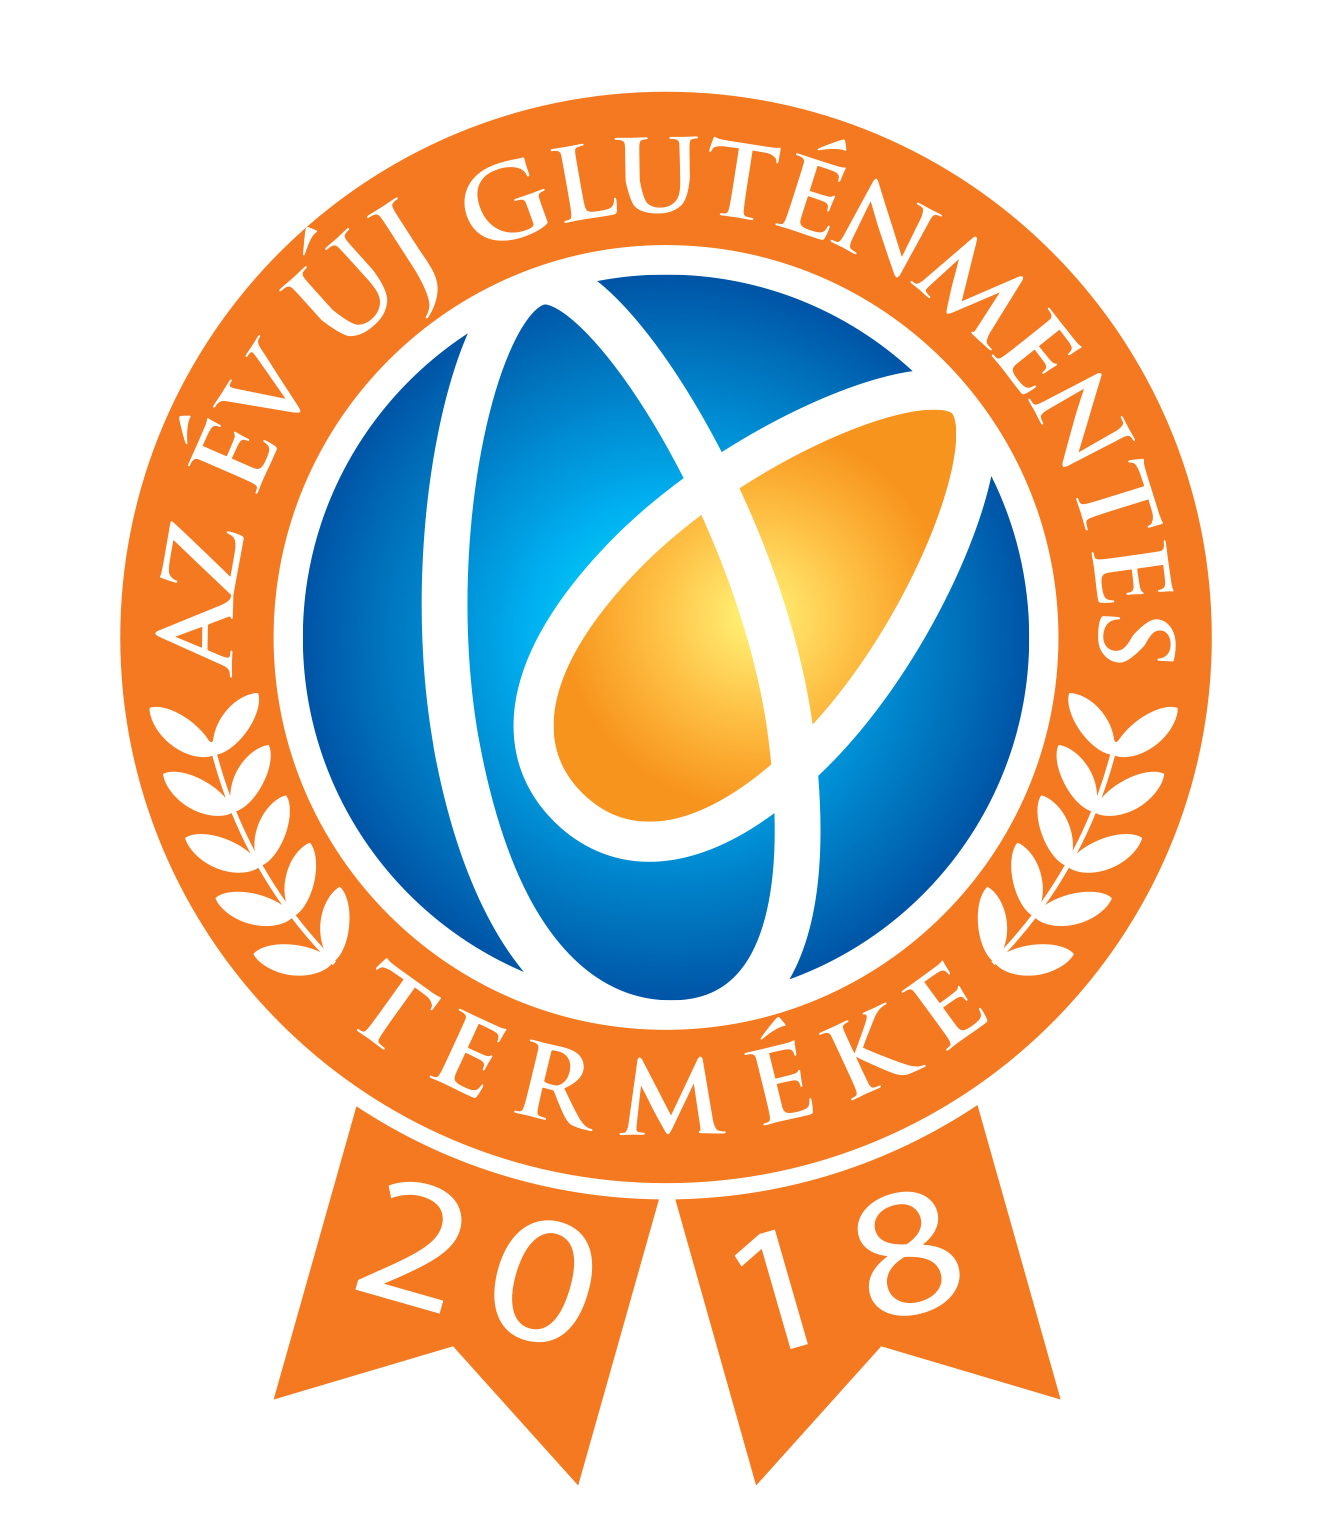 ev_gmentes_termeke_2018_logo.jpg